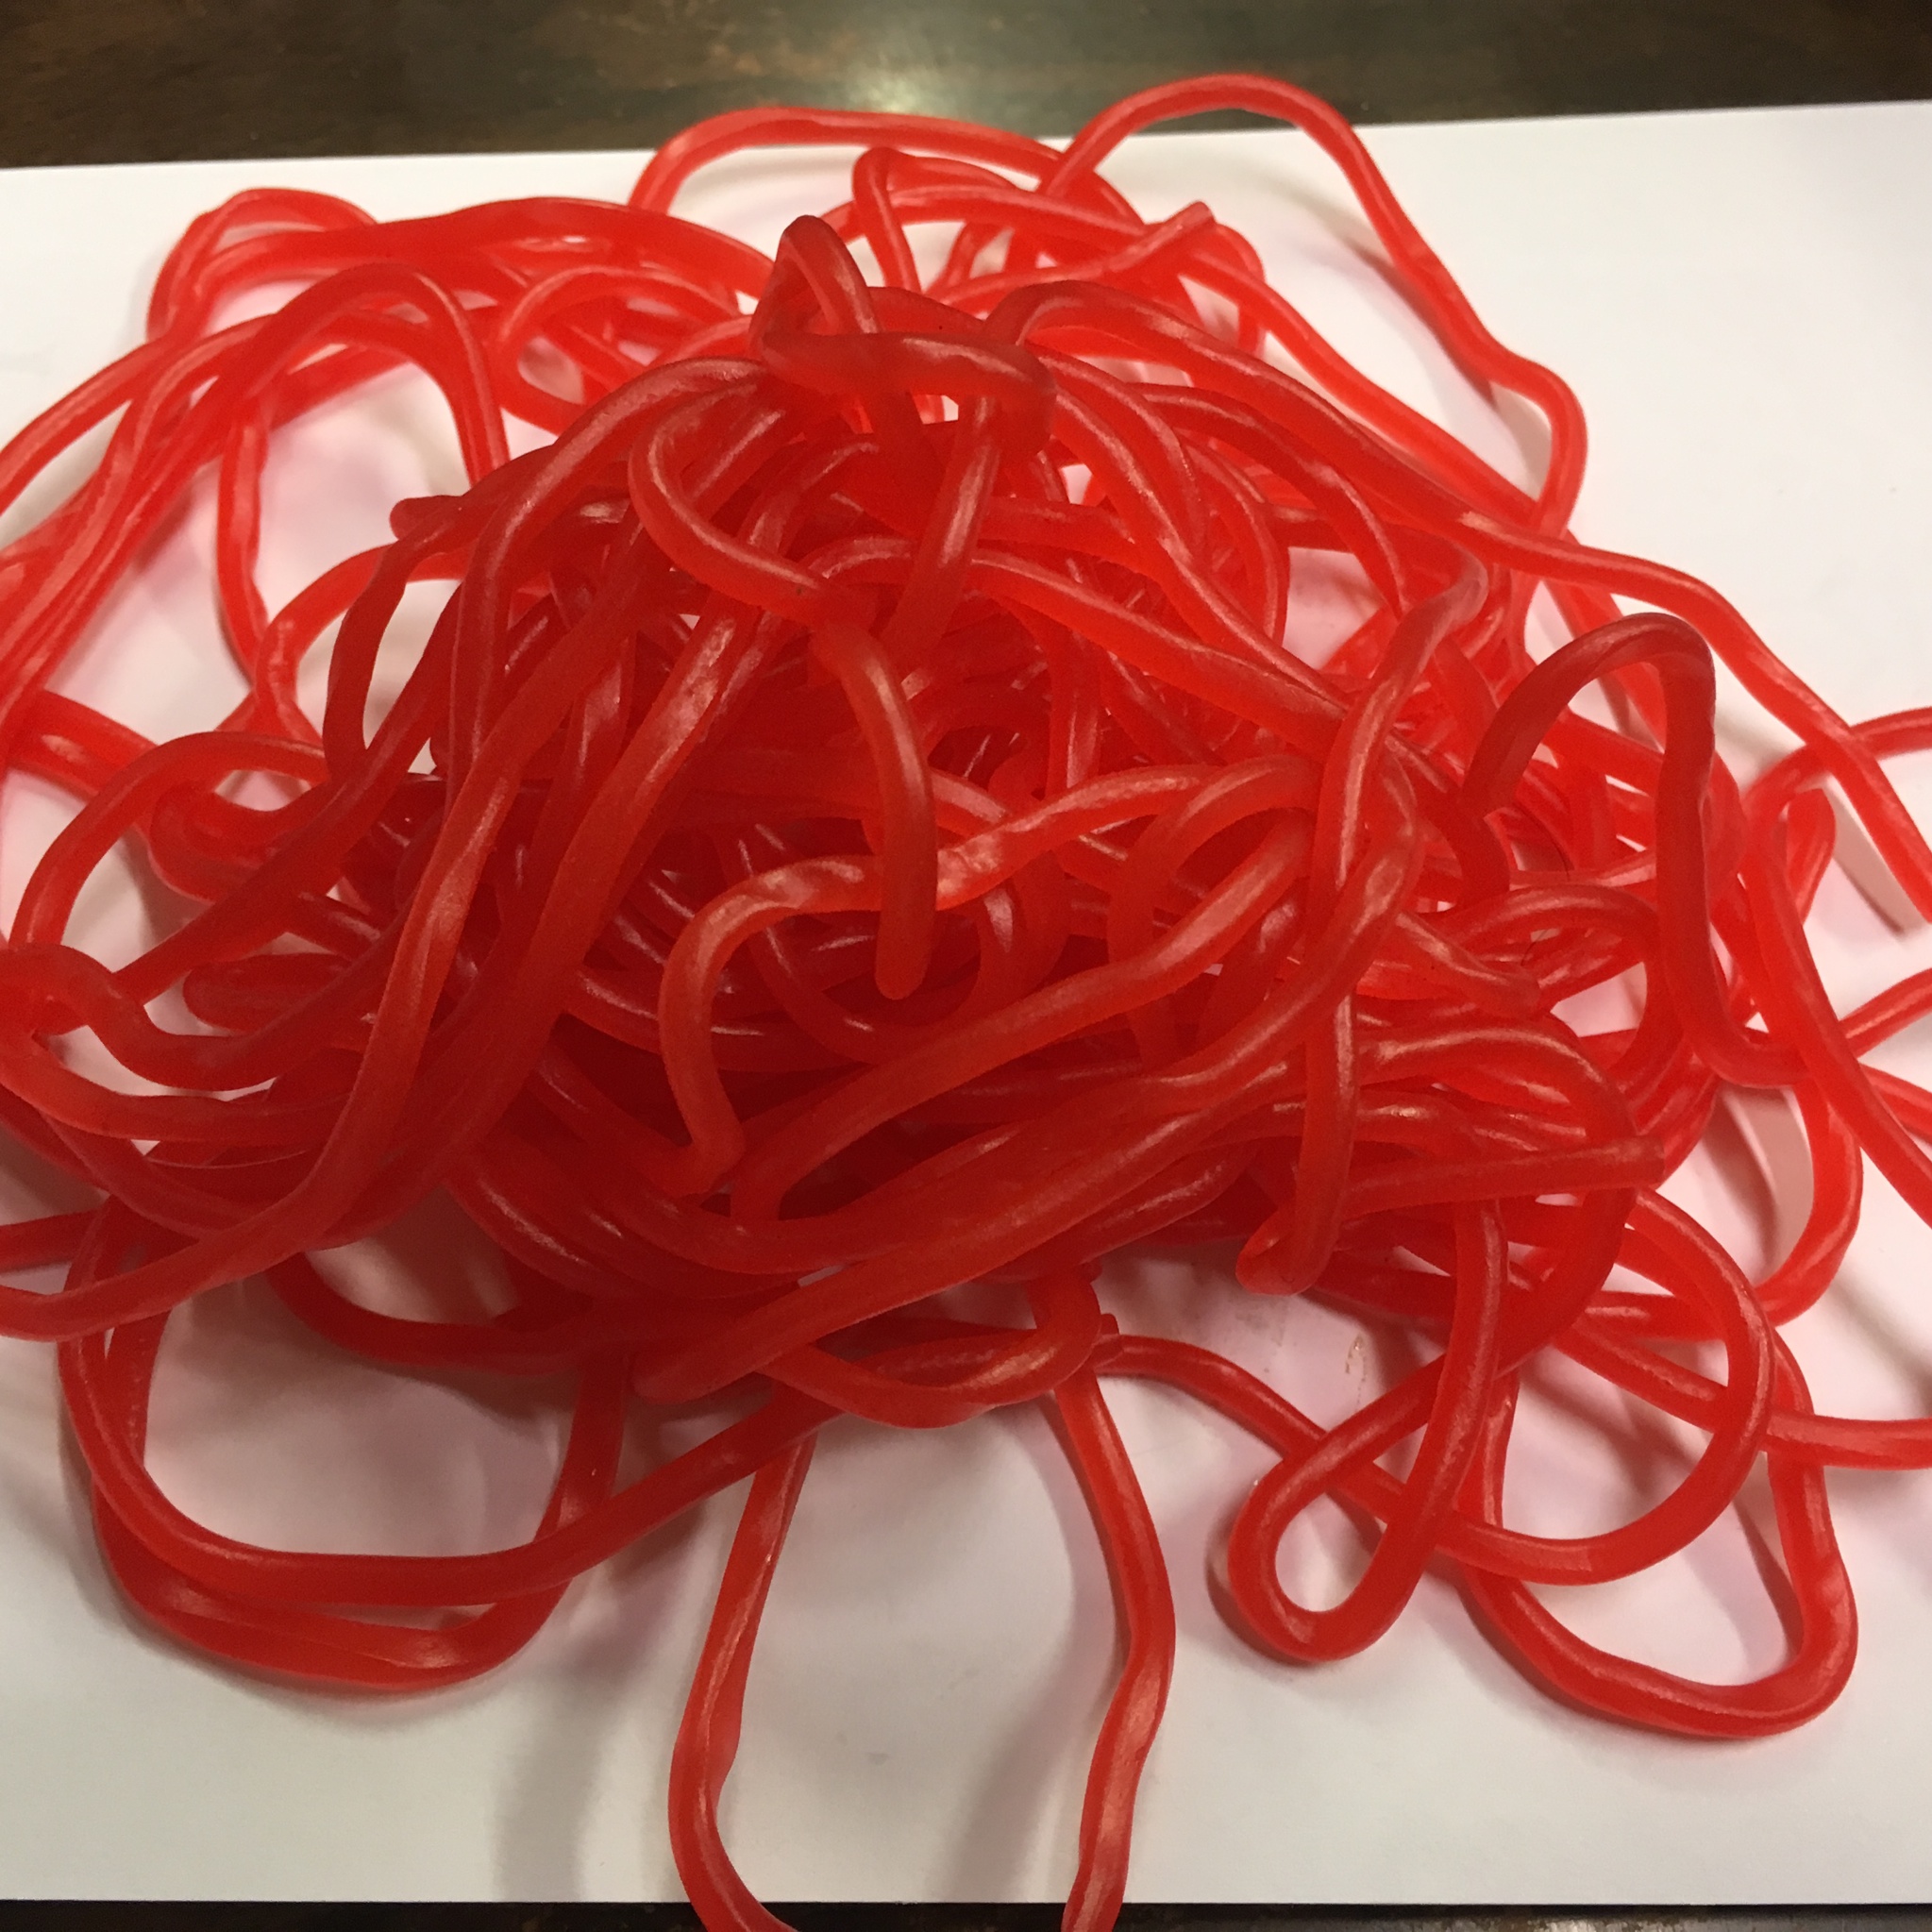 Red licorice rope